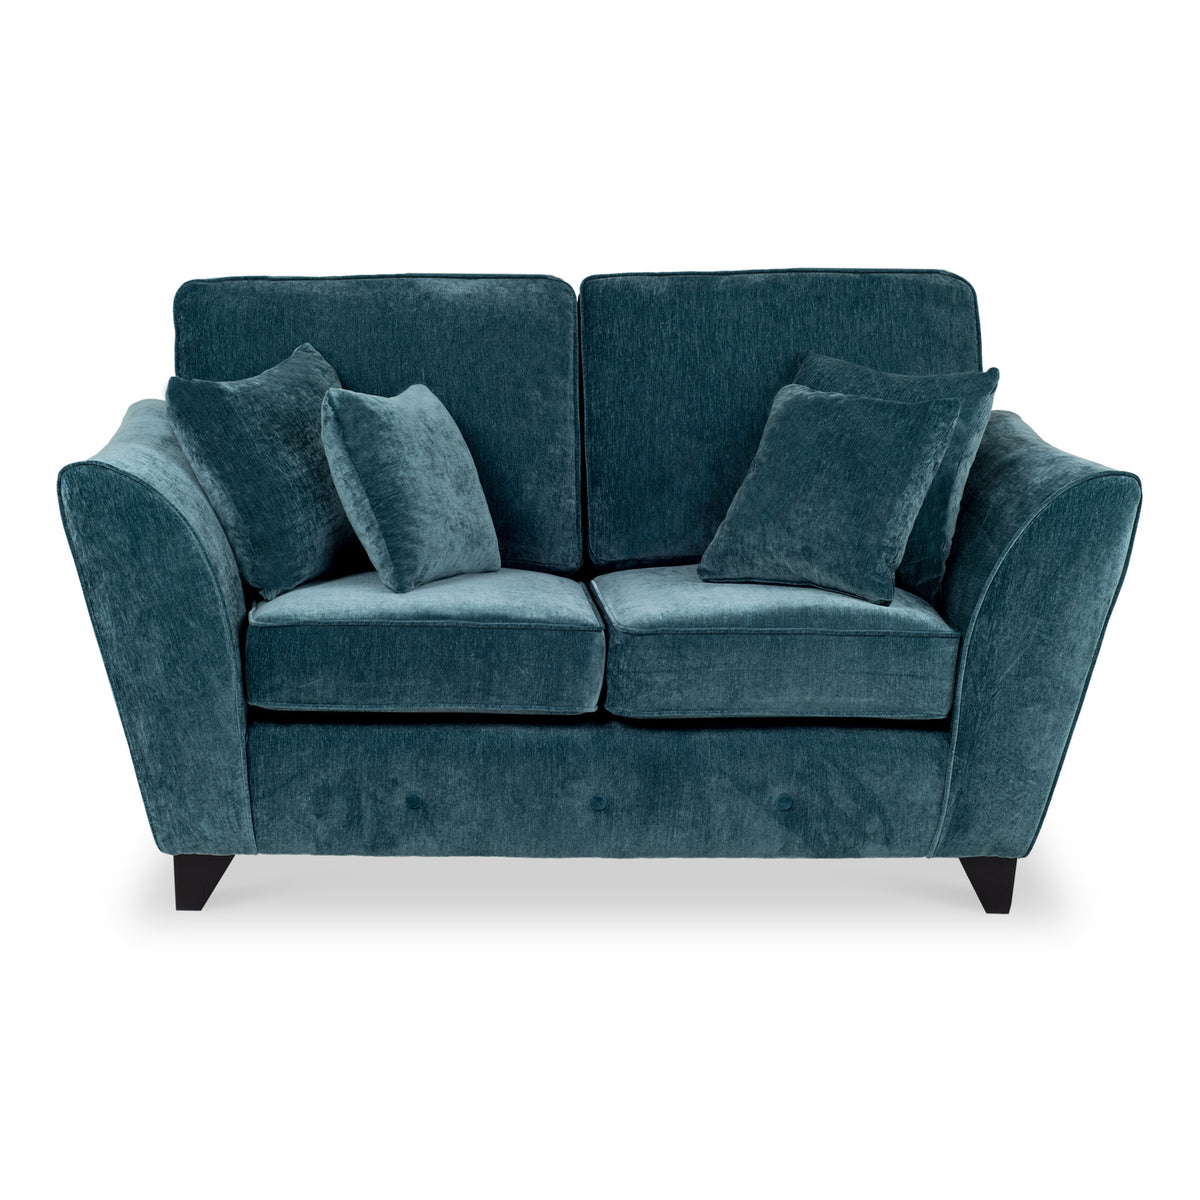 Harris 2 Seater Sofa in Emerald by Roseland Furniture